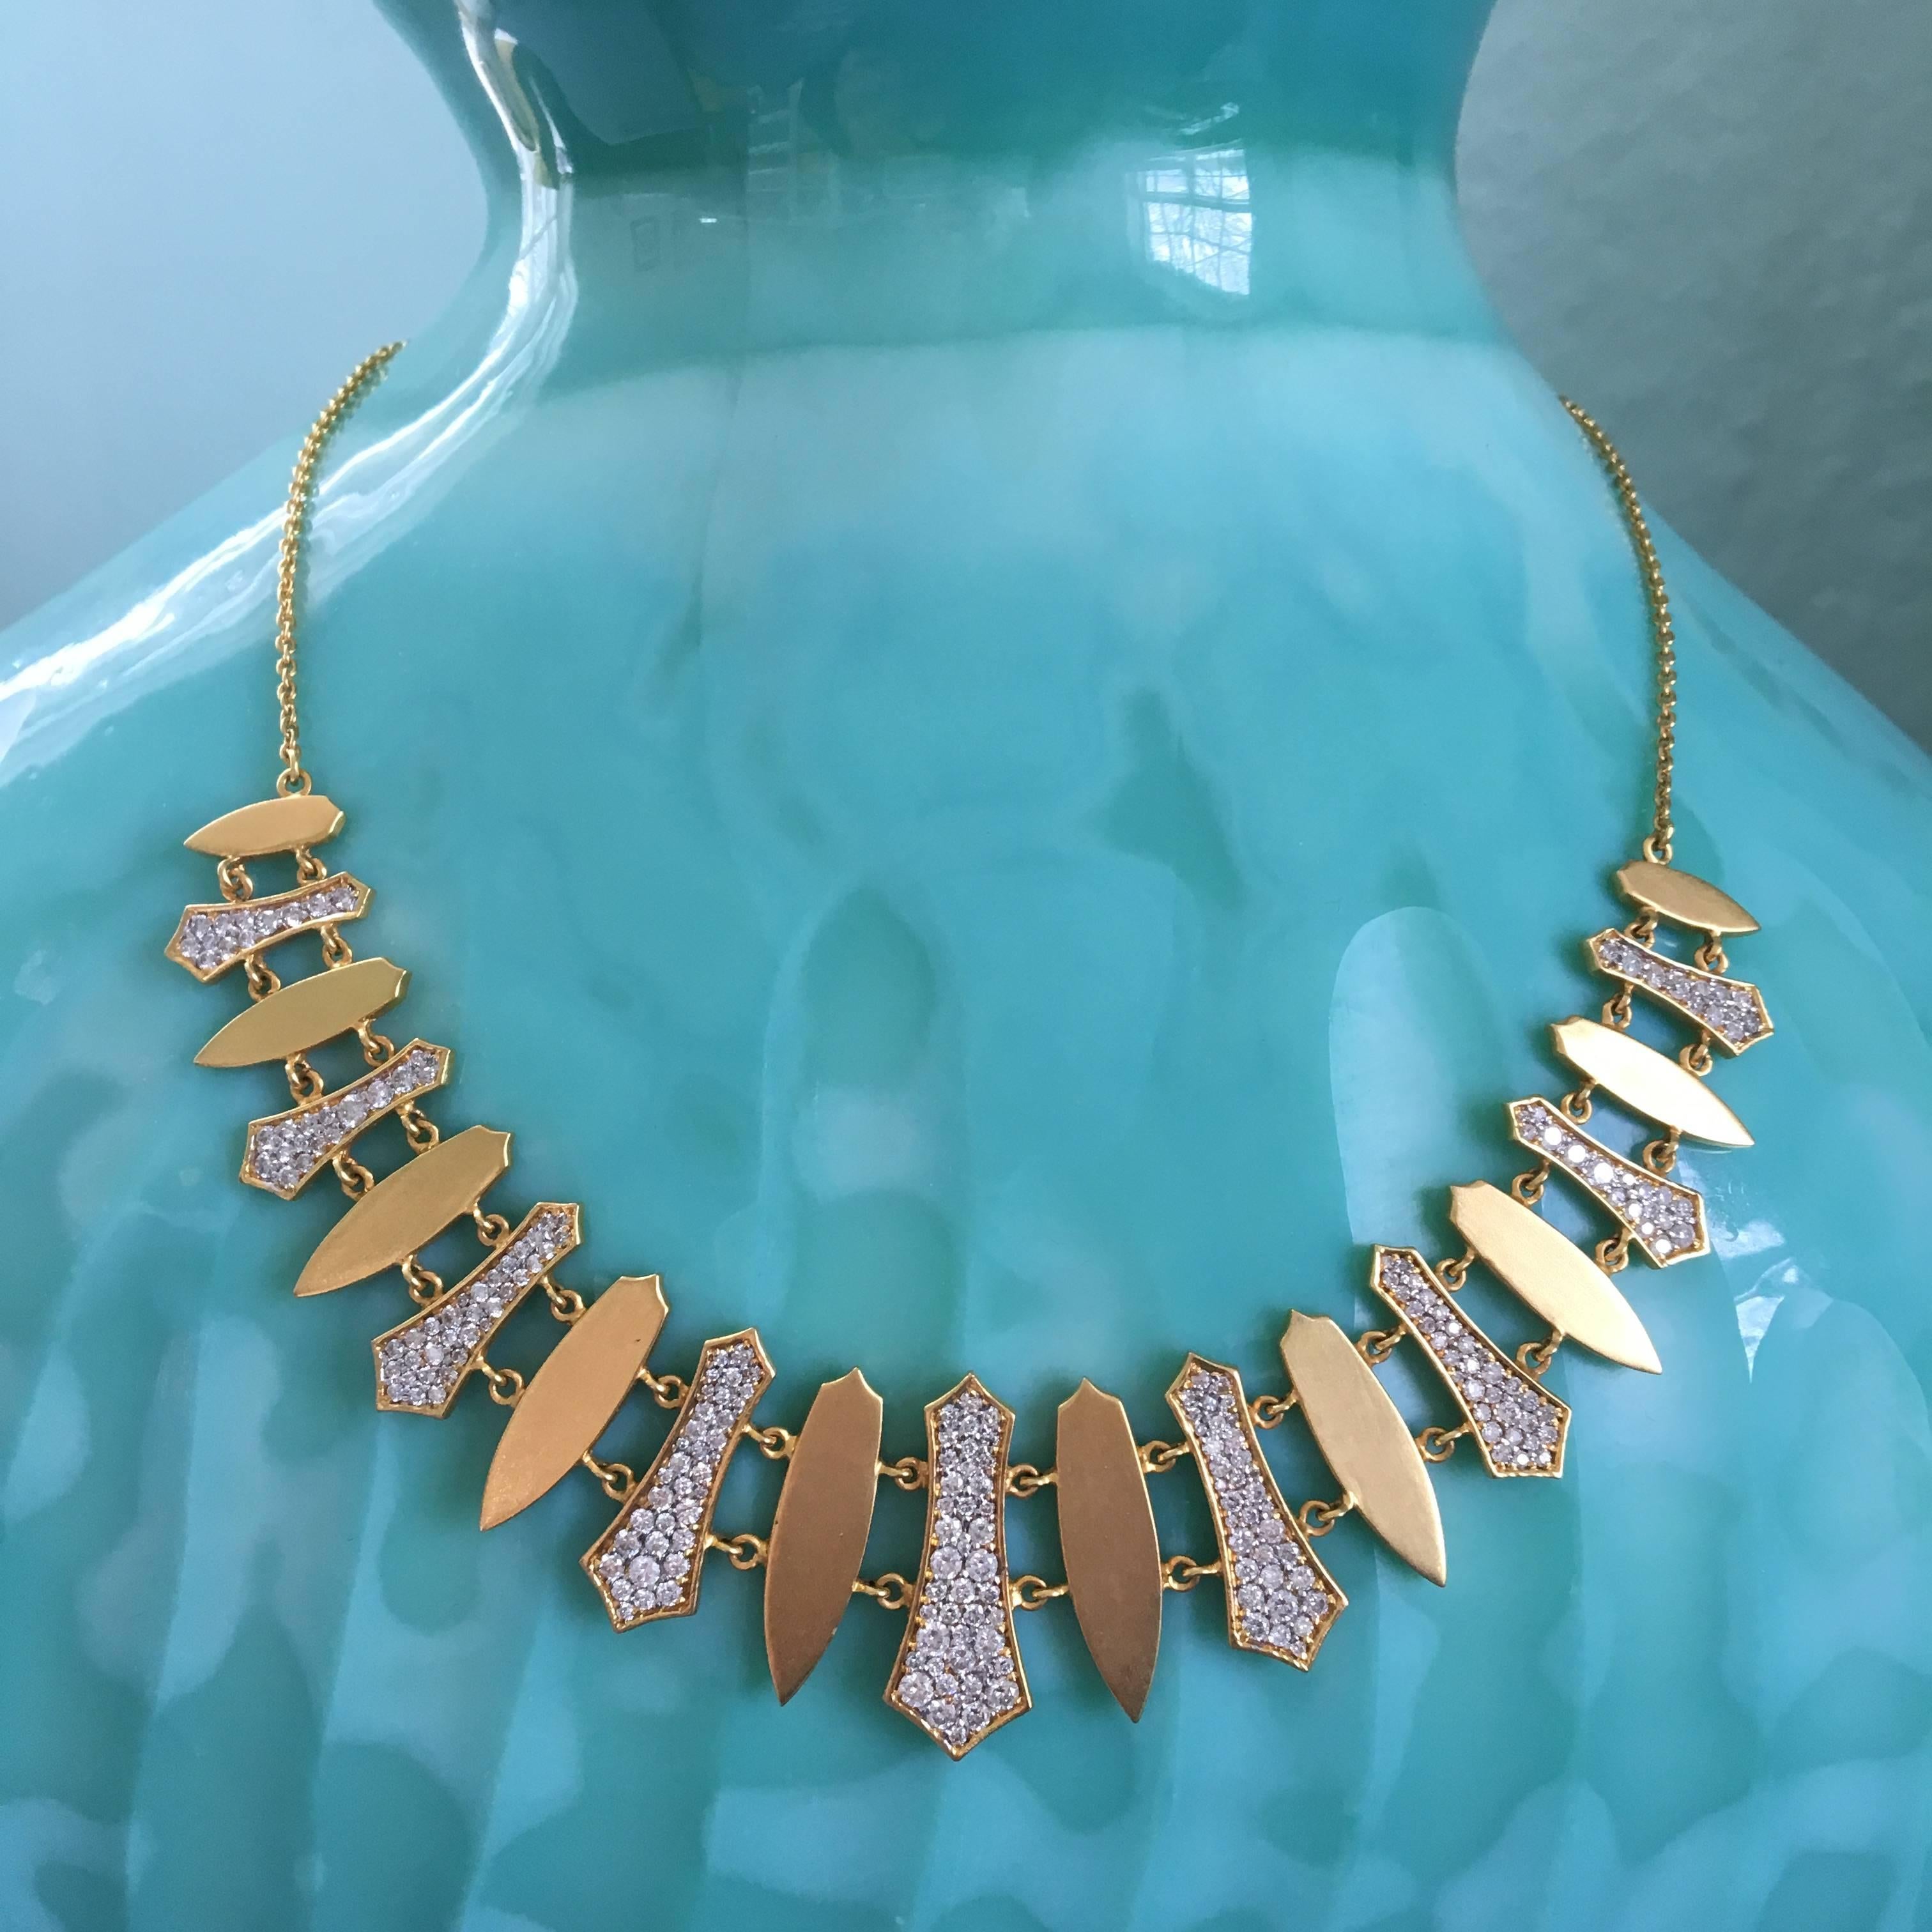 Lauren Harper 2.79 Carat Diamonds, 18 Karat Gold Statement Necklace For Sale 1